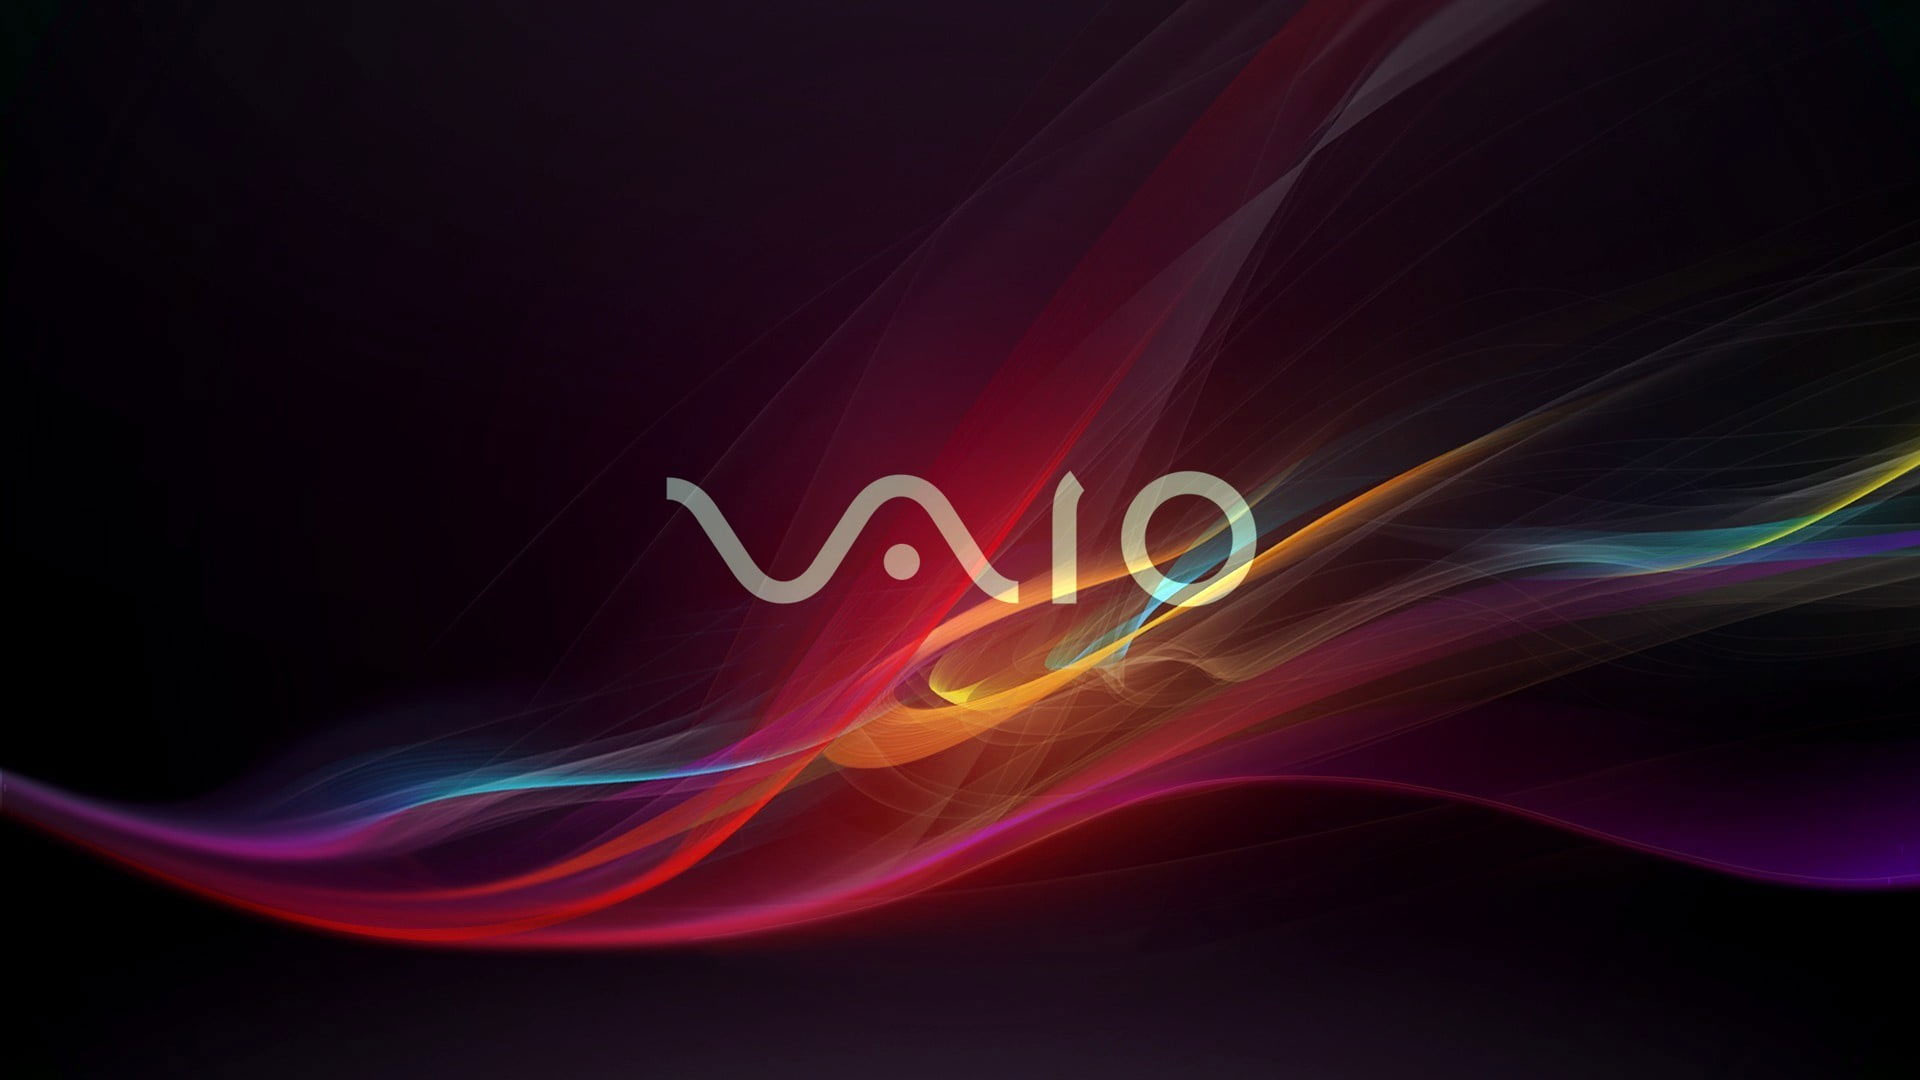 Sony Vaio logo wallpaper, colorful, shapes, digital art, abstract, motion